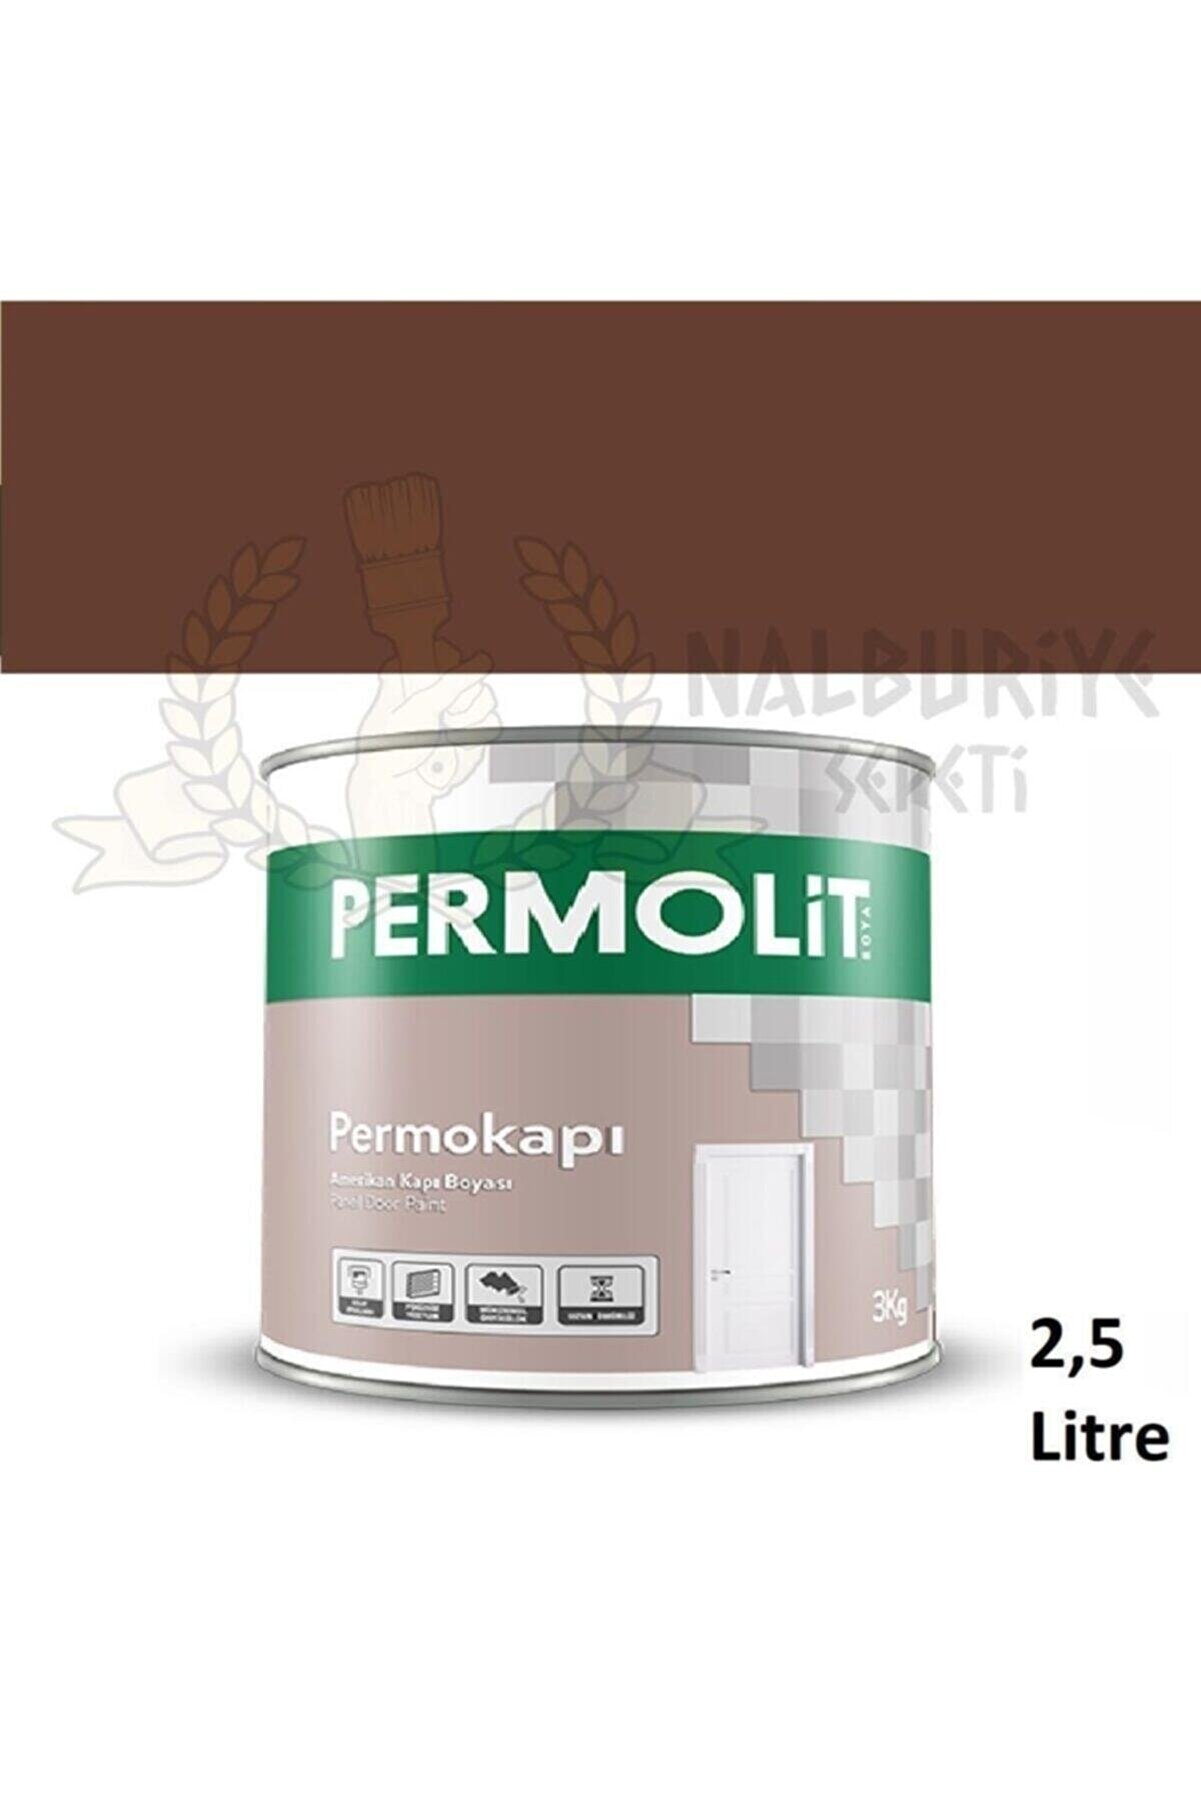 Permolit Sentetik Amerikan Panel Kapı Boyası Açık Kahve 2.5 Lt.